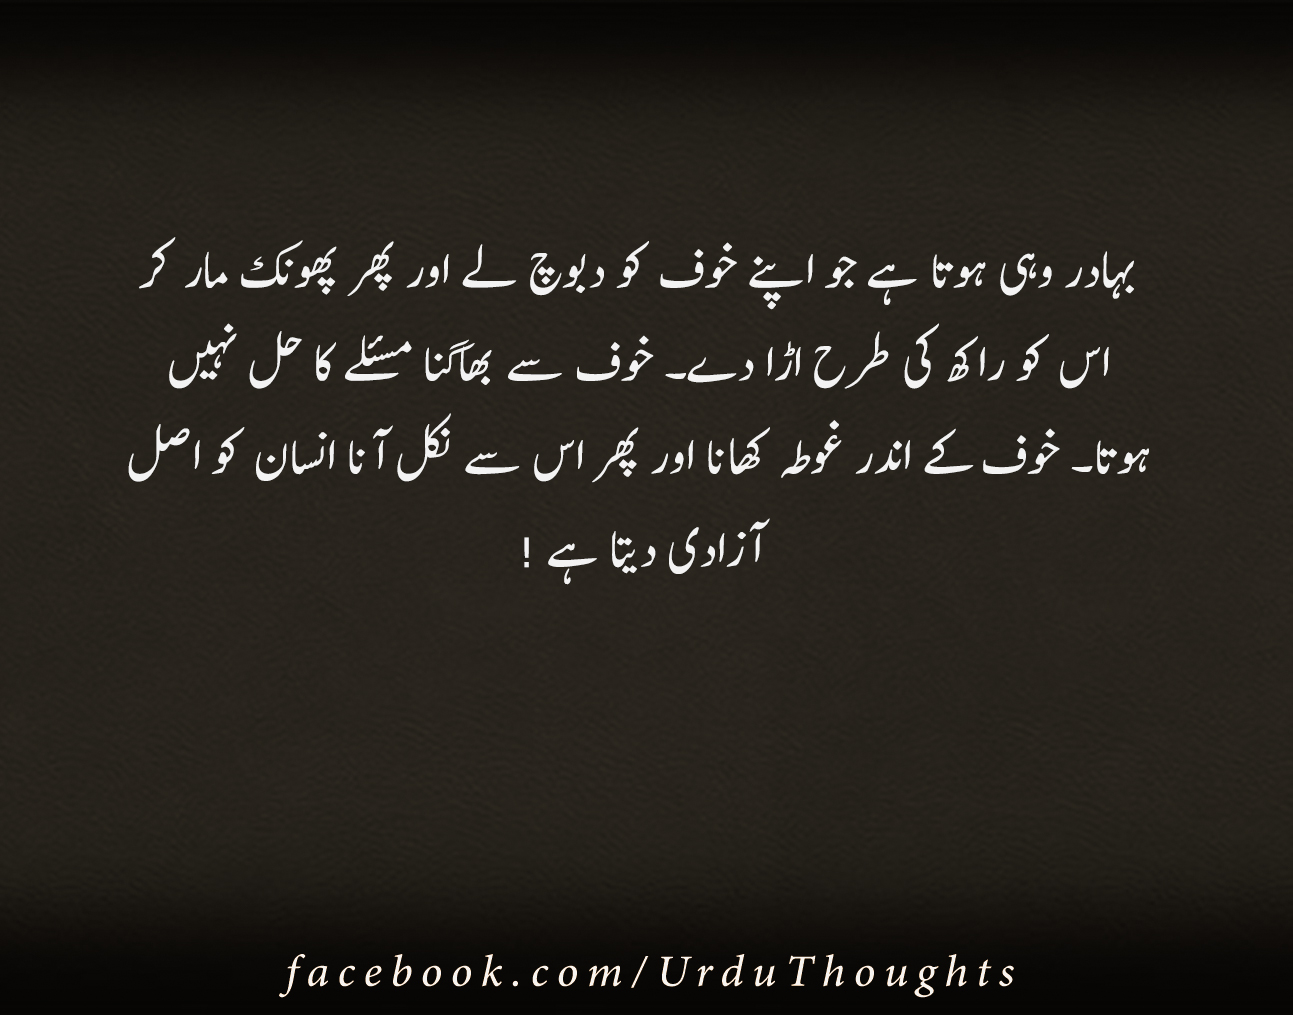 Best Urdu Quotes With Images Famous Urdu Quotes Poetry In Urdu